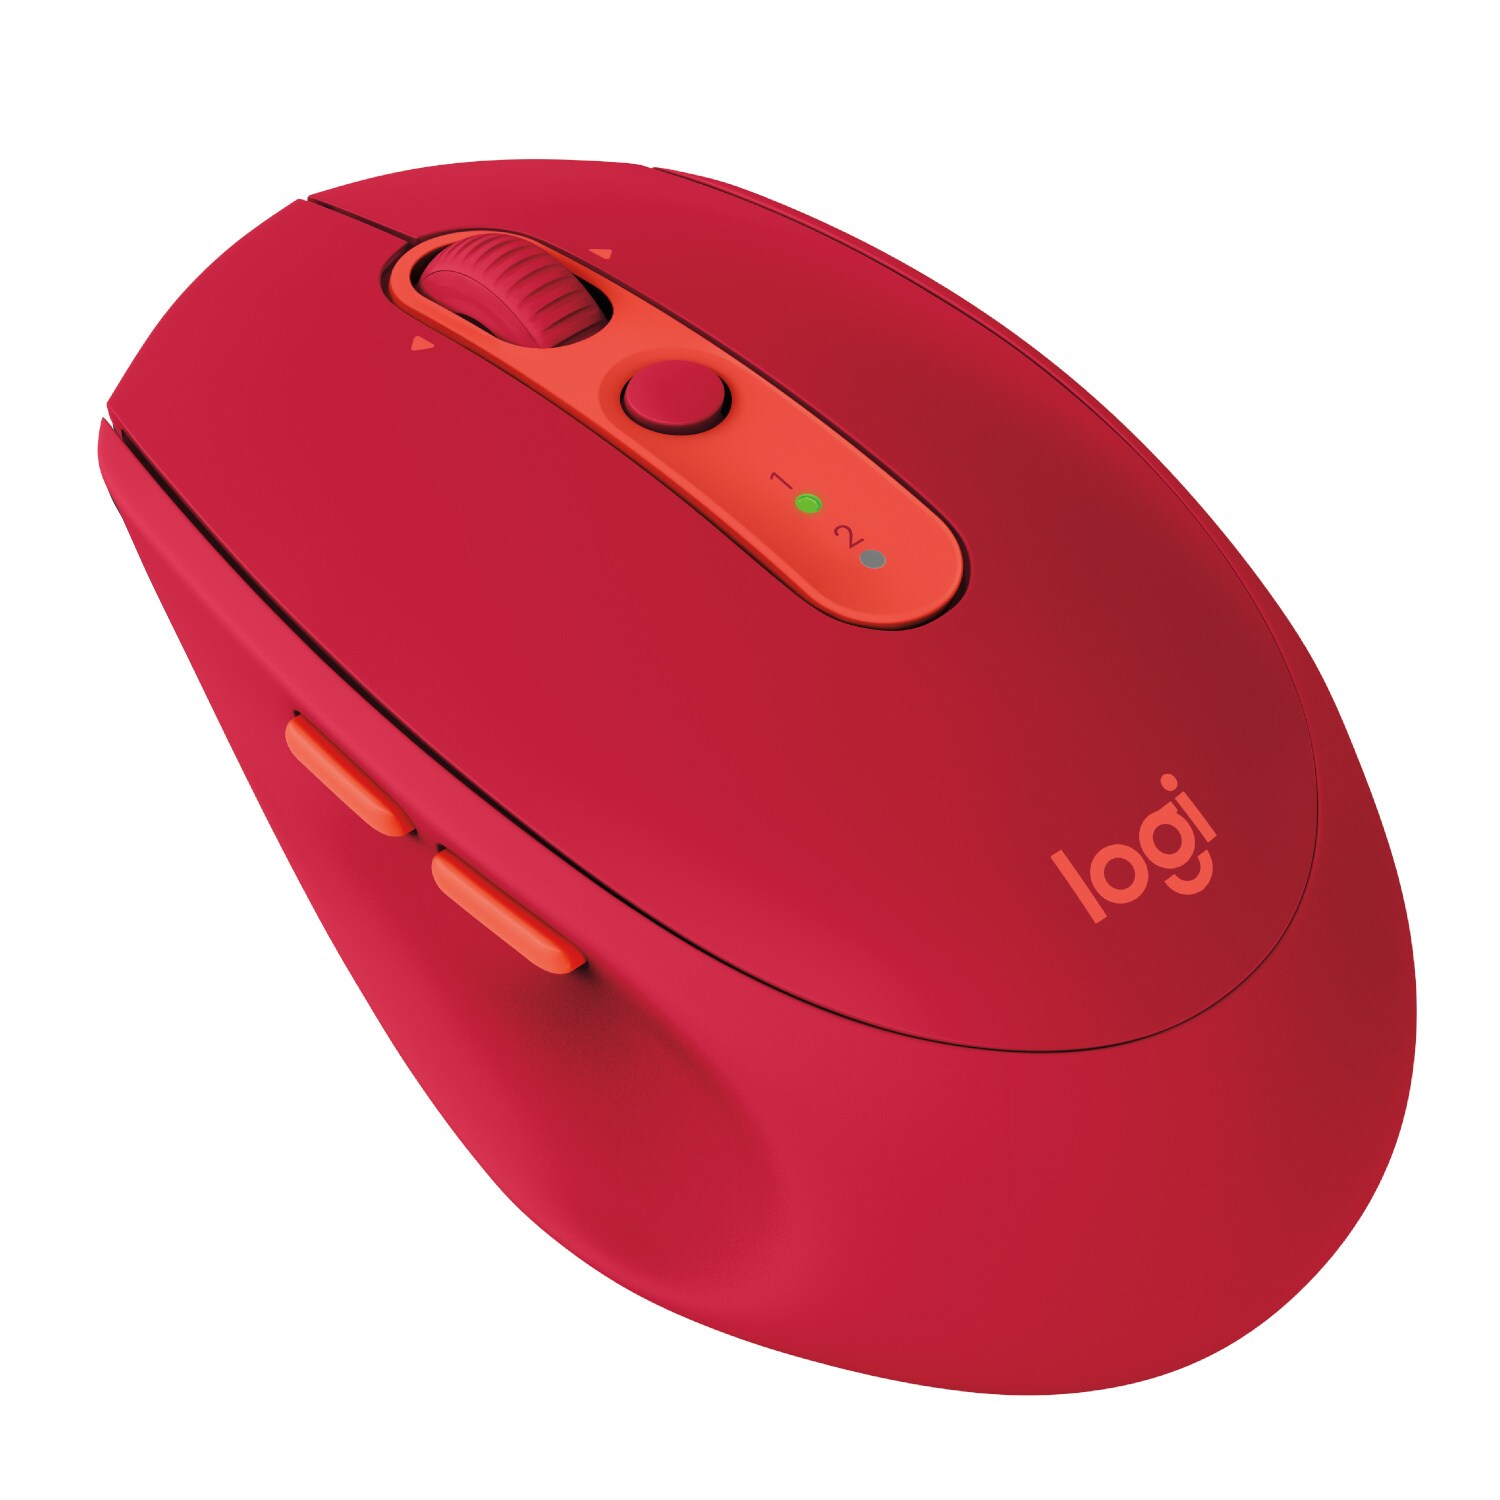 Logitech M590 Multi-Device Silent trådlös mus (röd) - Datormus ...